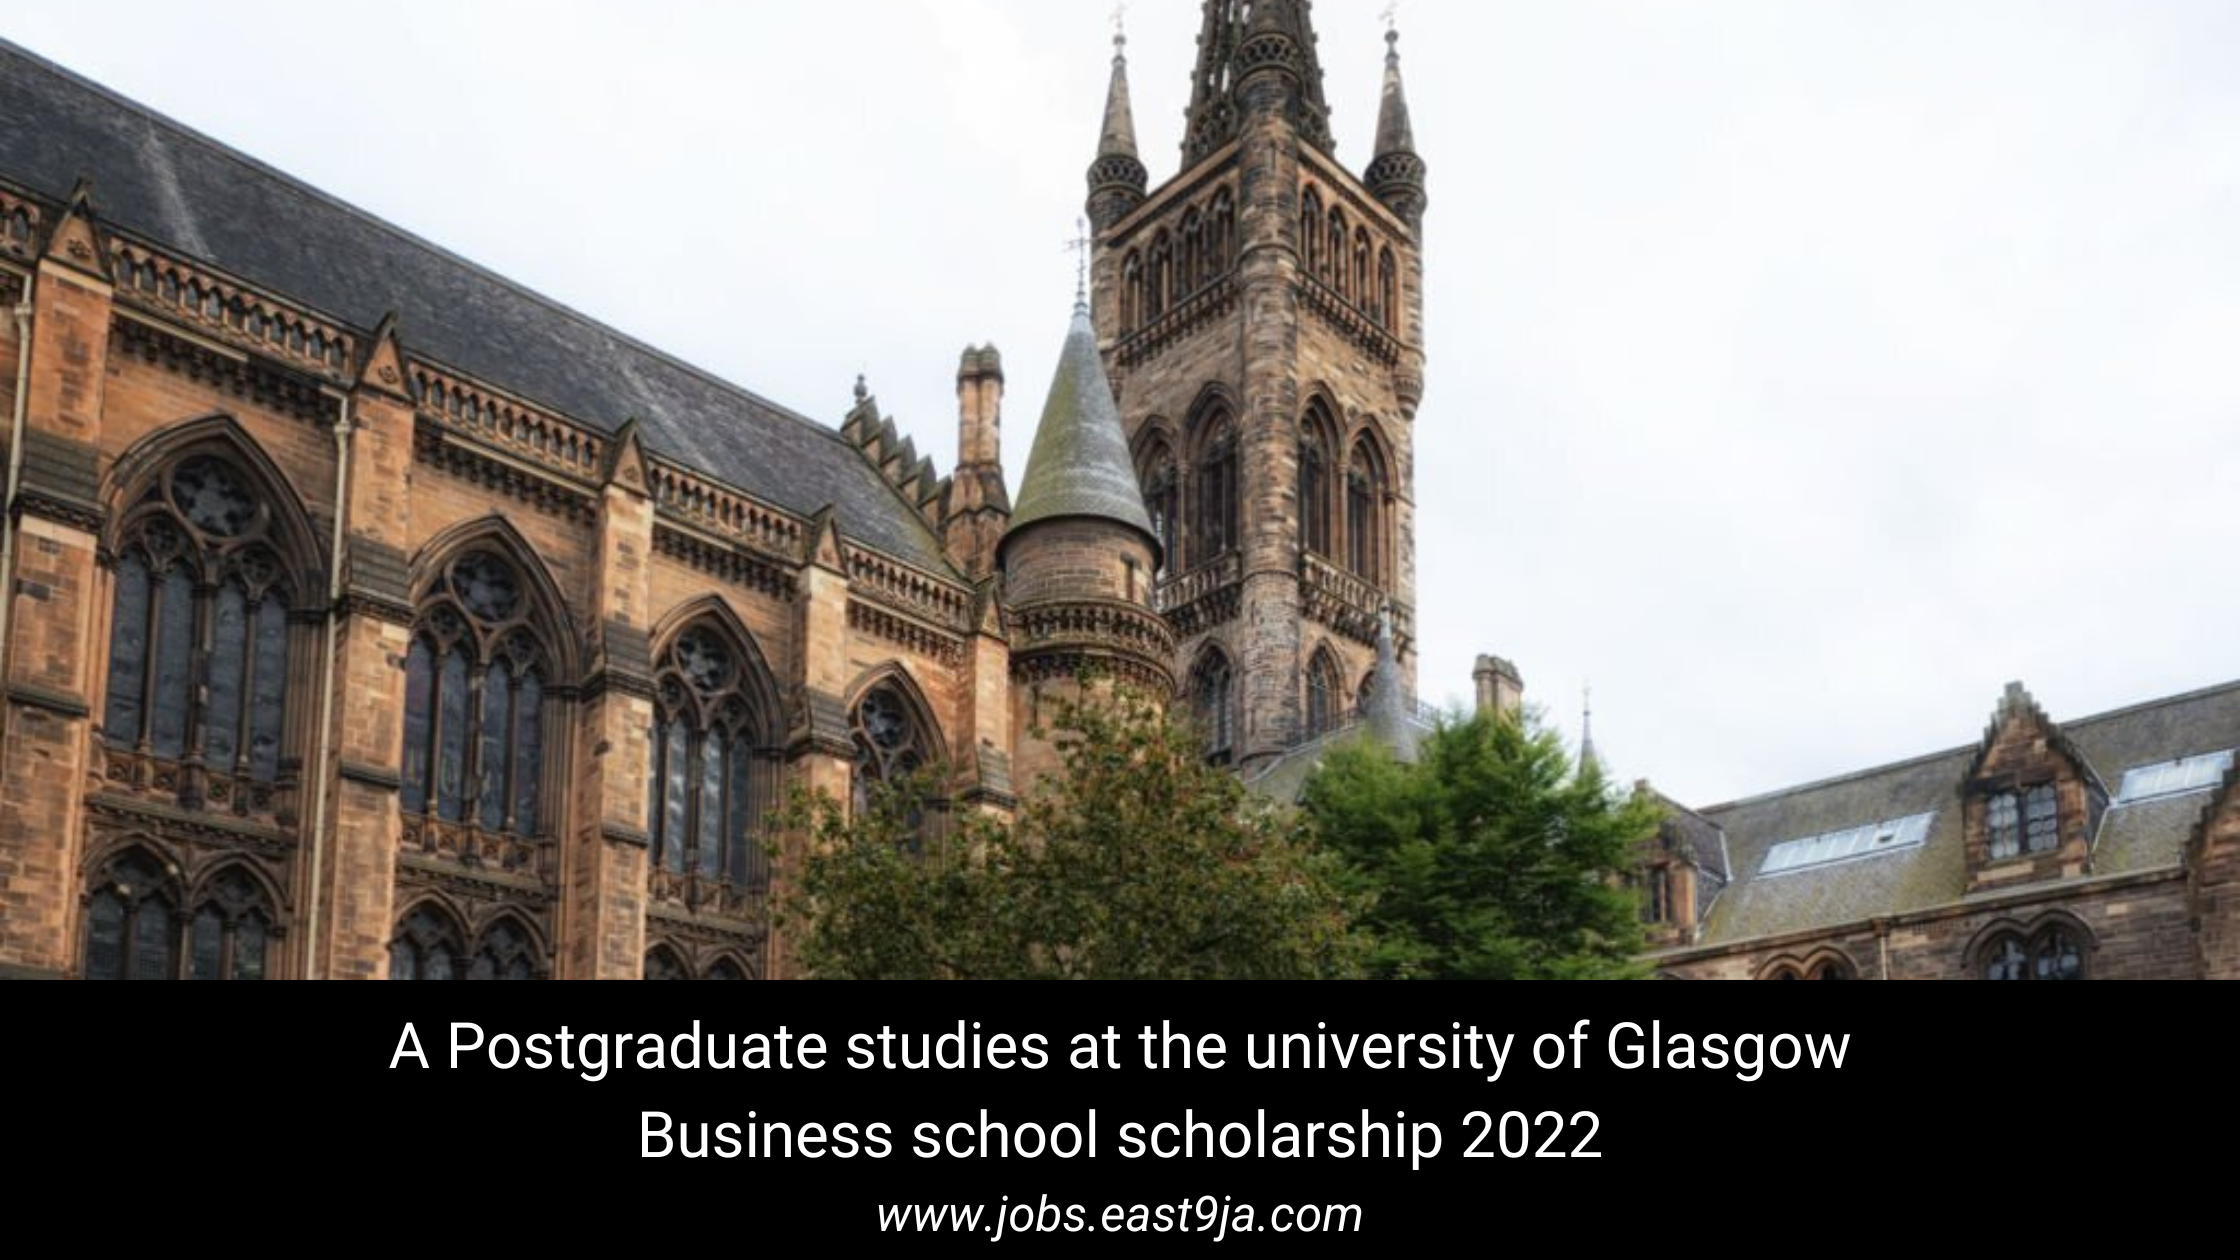 A Postgraduate studies at the university of Glasgow Business school scholarship 2022